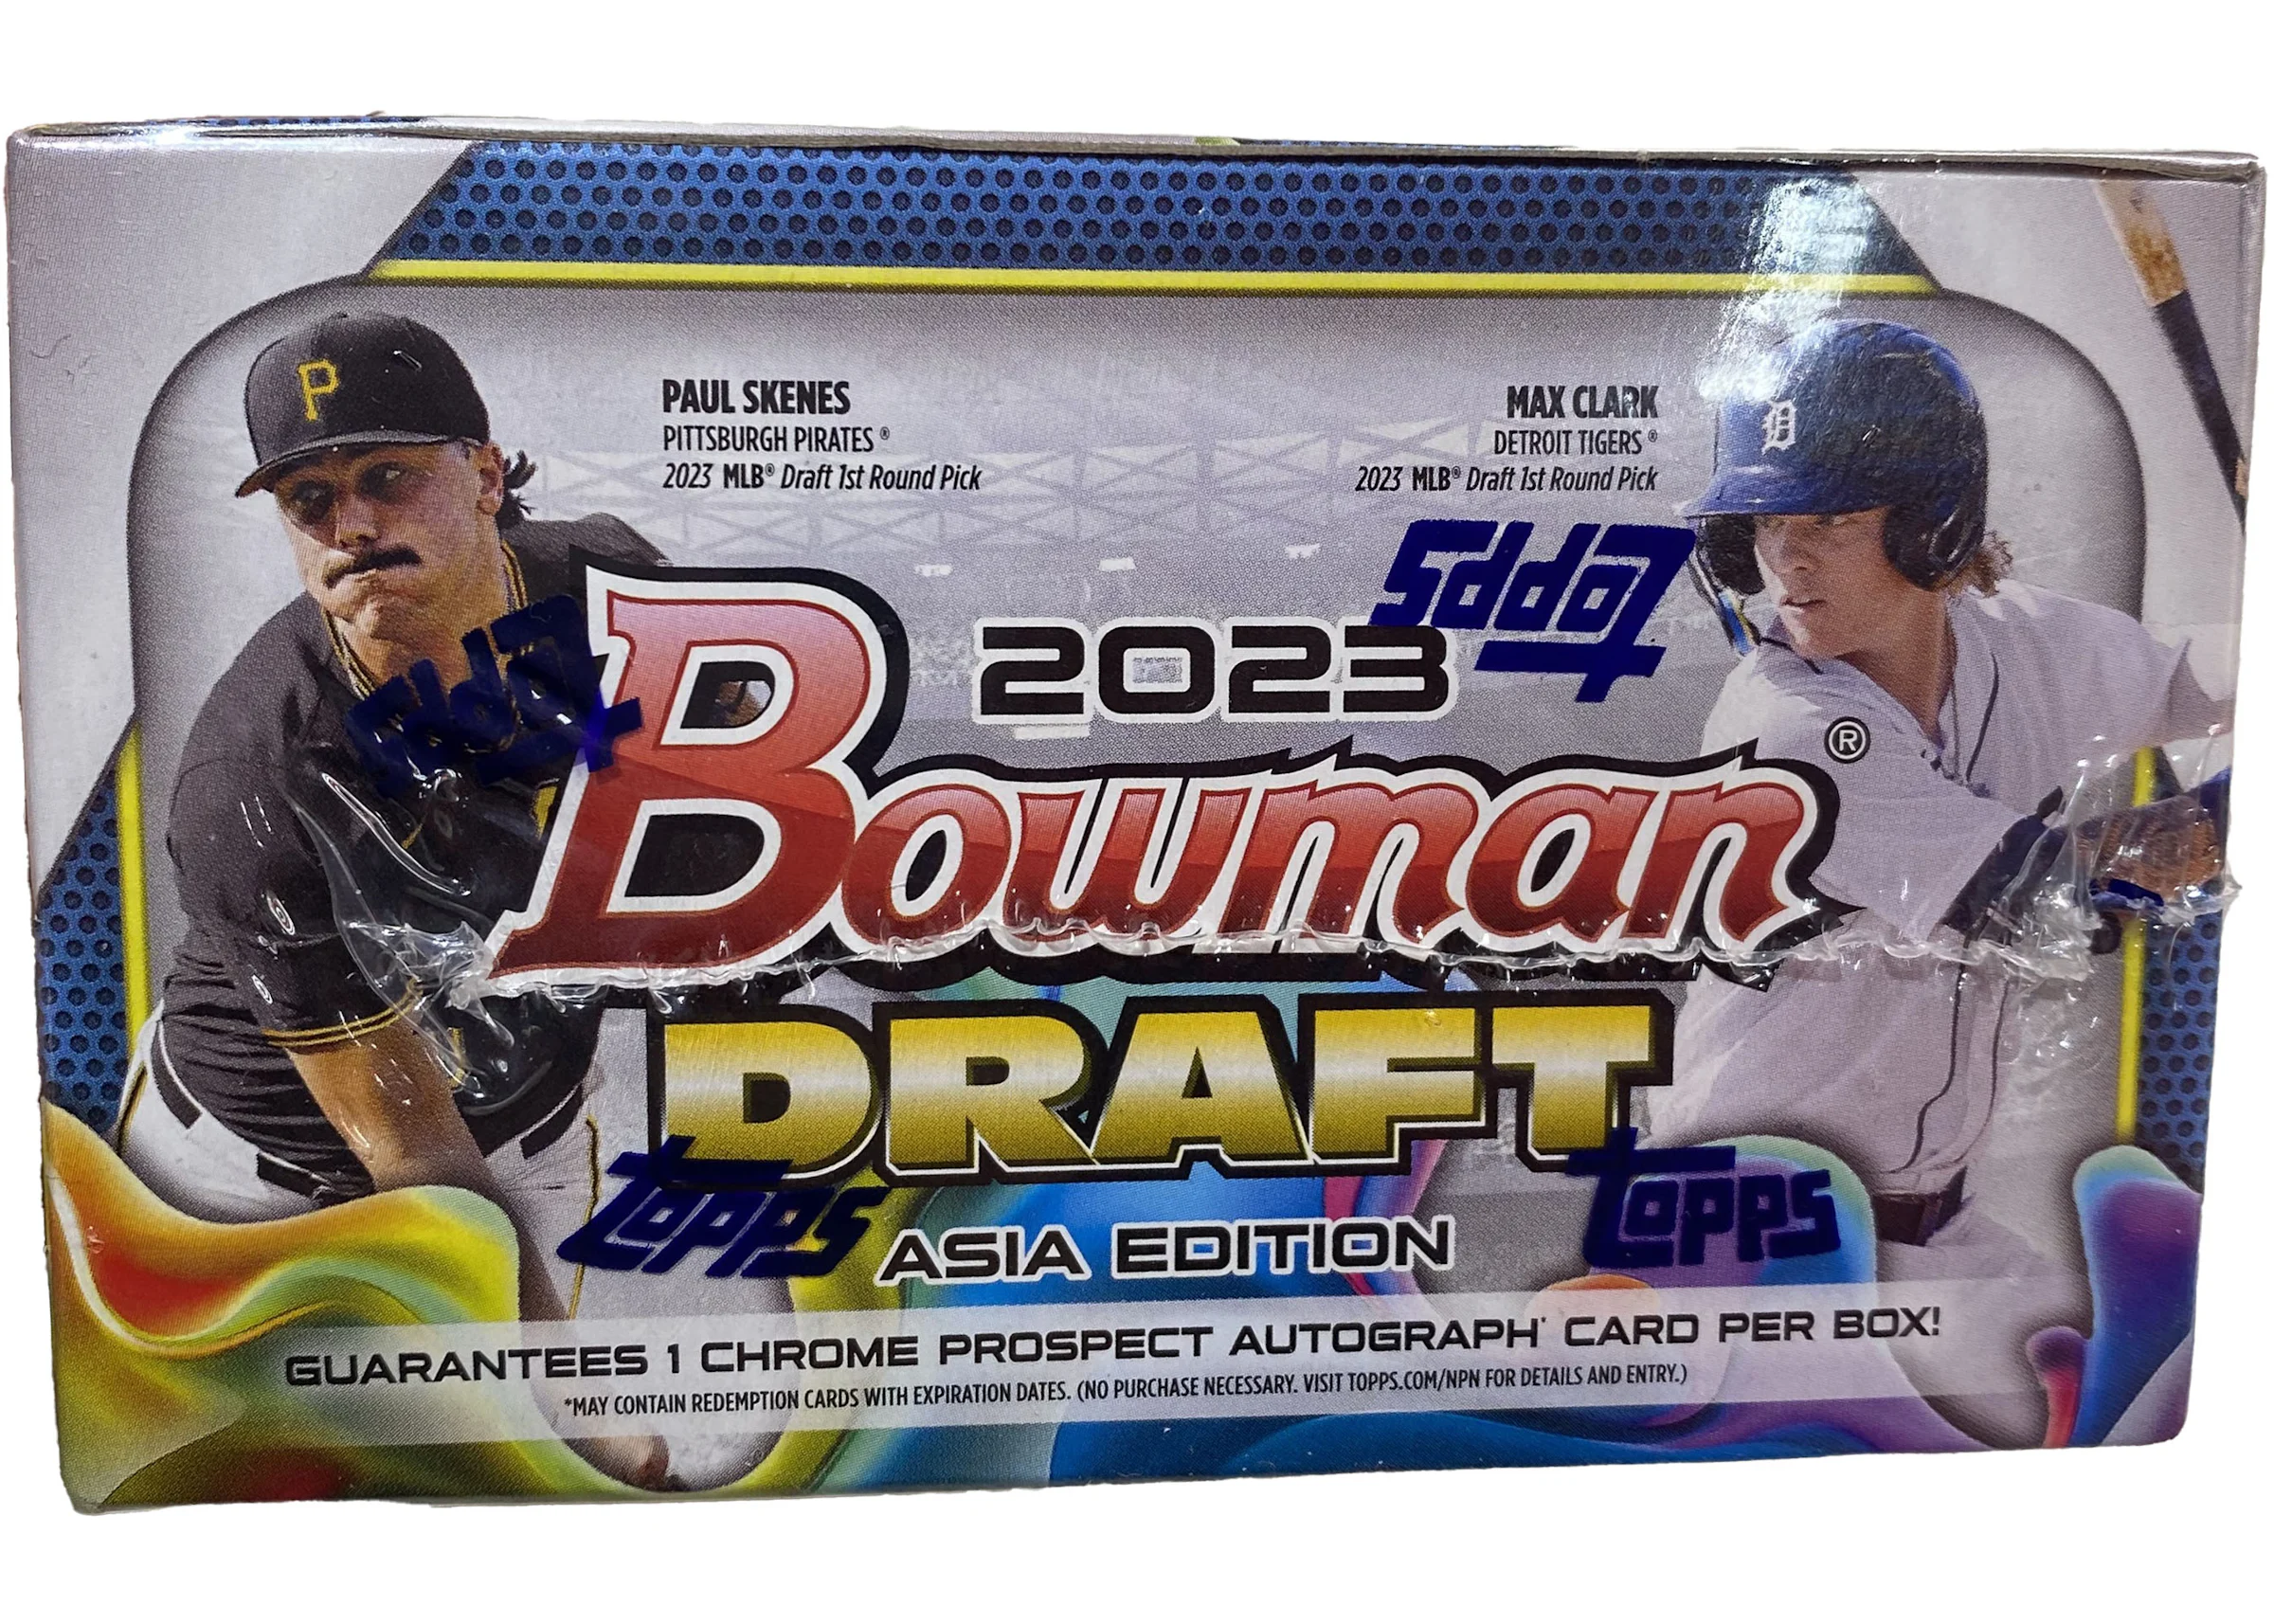 https://images.stockx.com/images/2023-Bowman-Draft-Asia-Baseball-Hobby-Box.jpg?fit=fill&bg=FFFFFF&w=1200&h=857&fm=webp&auto=compress&dpr=2&trim=color&updated_at=1707864787&q=60